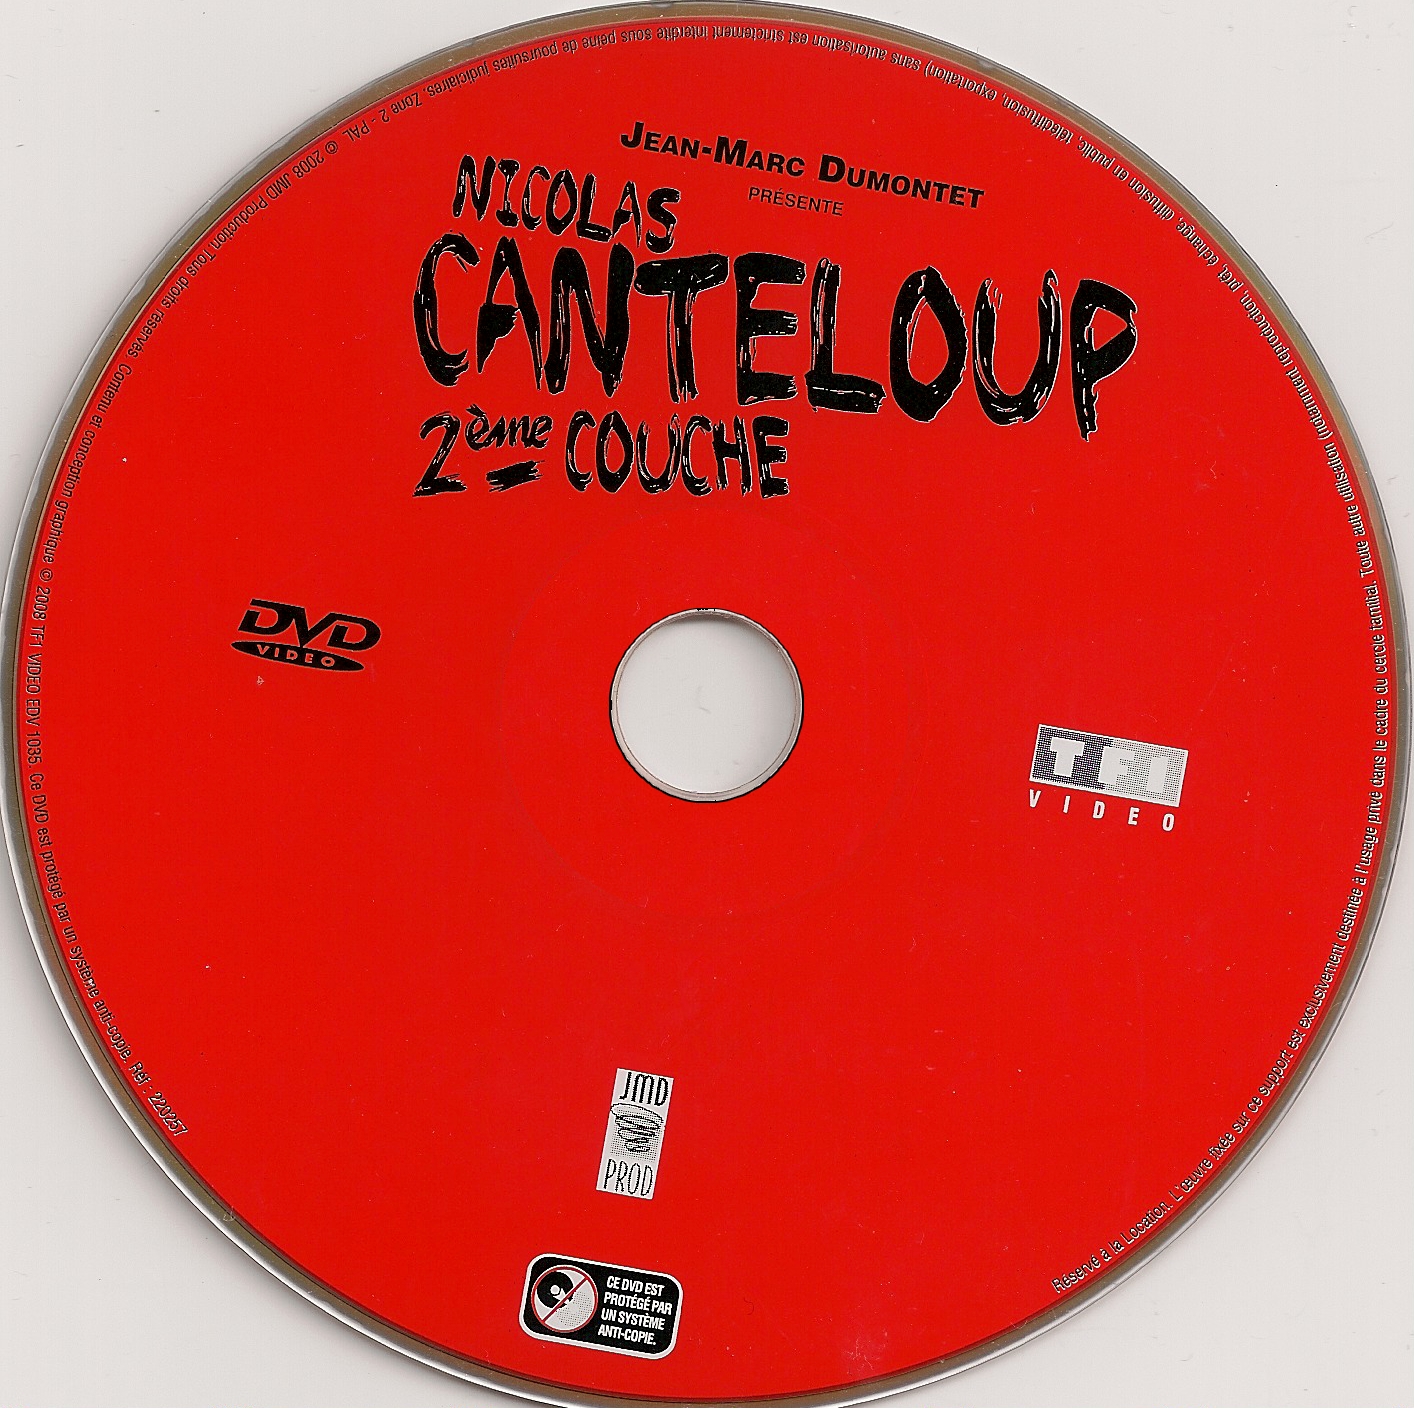 Nicolas Canteloup - 2me couche